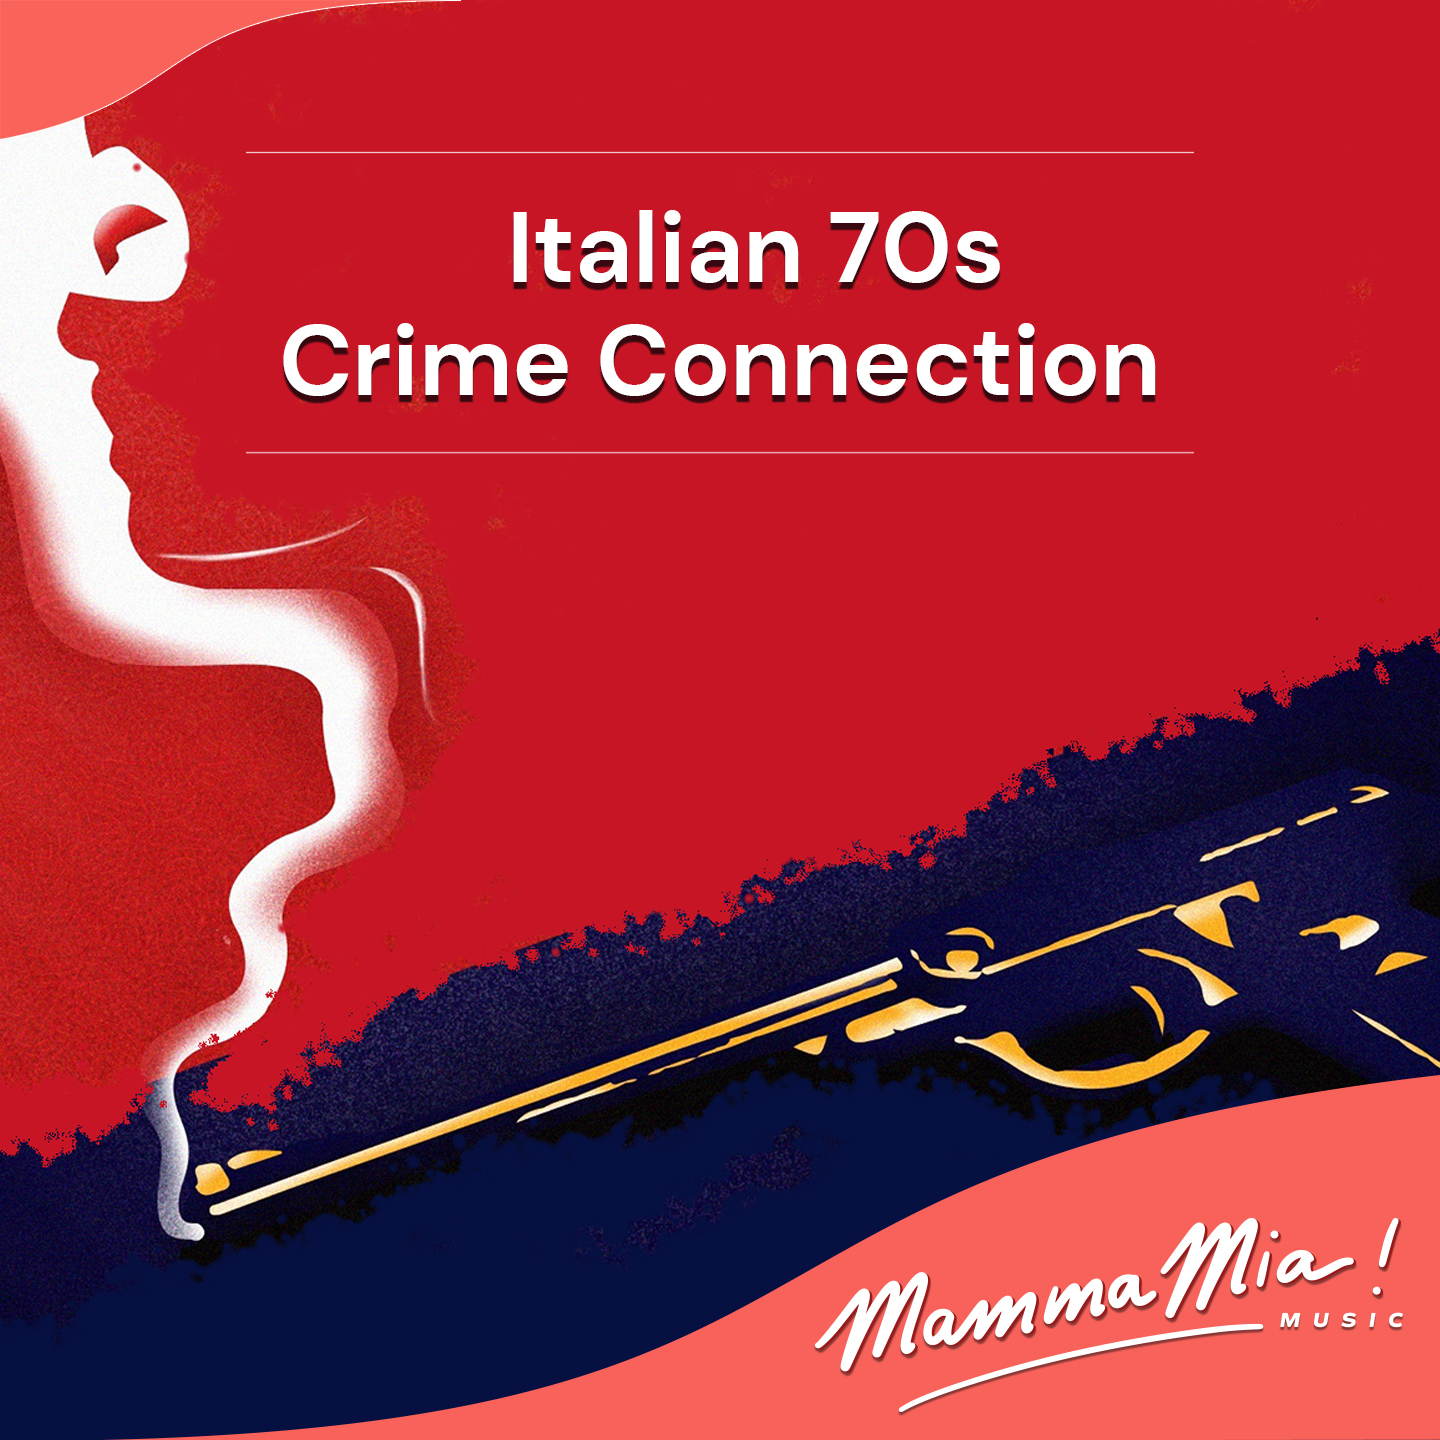 Italian 70s Crime Connection